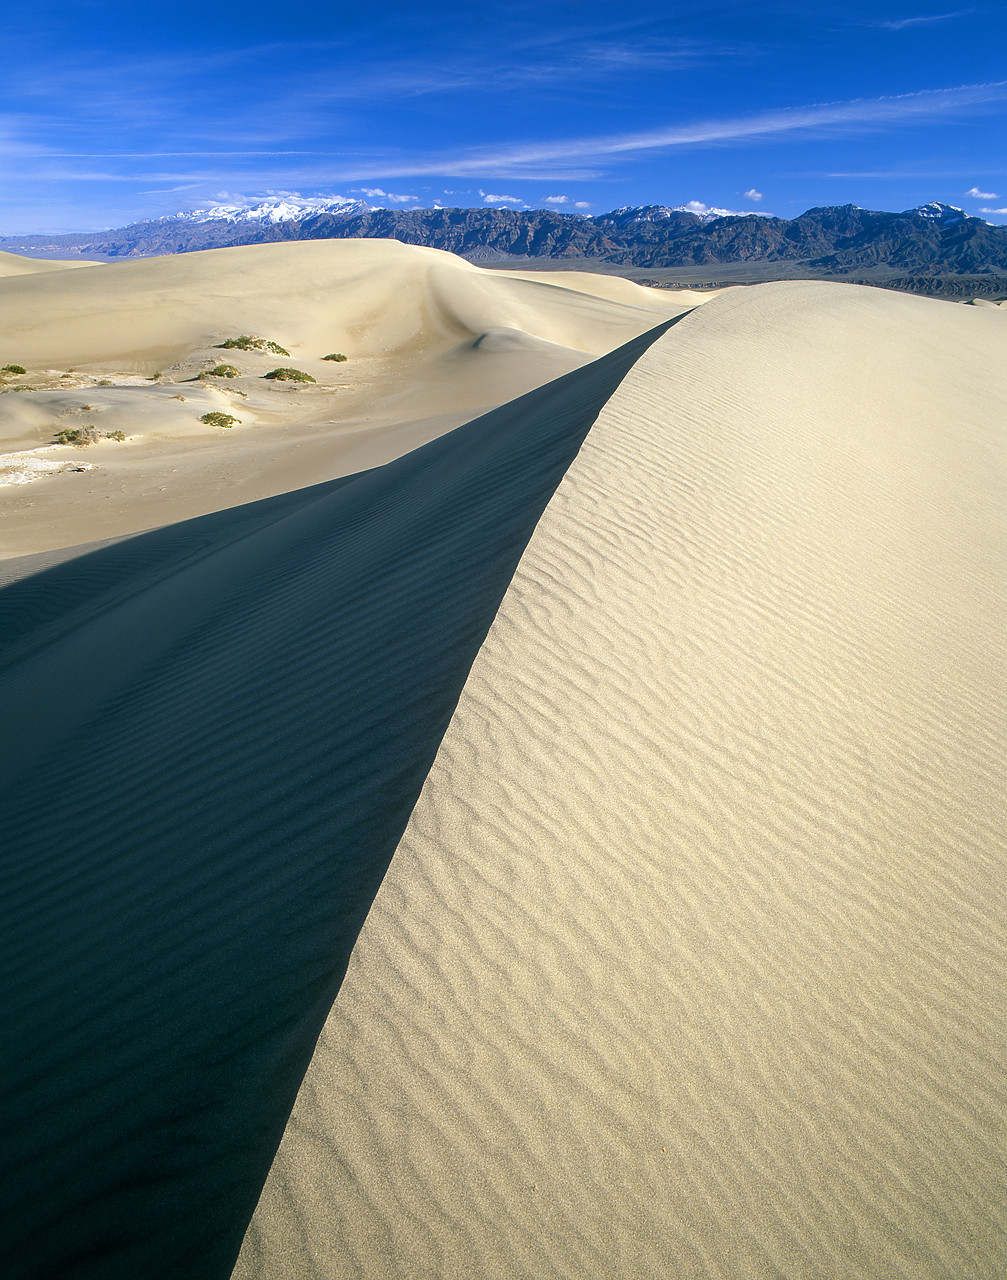 #980533-1 - Mesquite Sand Dunes, Death Valley National Park, California, USA